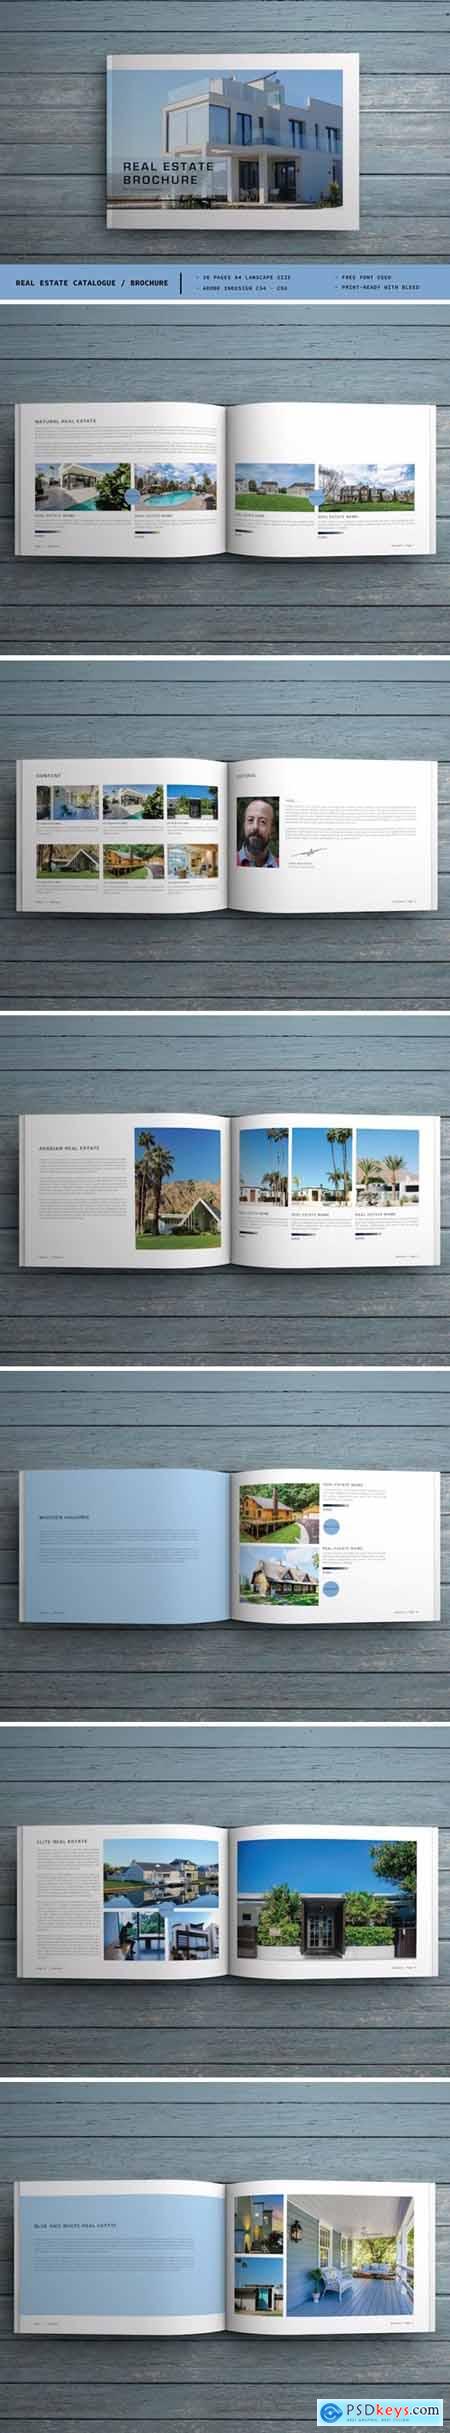 Real estate Catalogue - Brochure